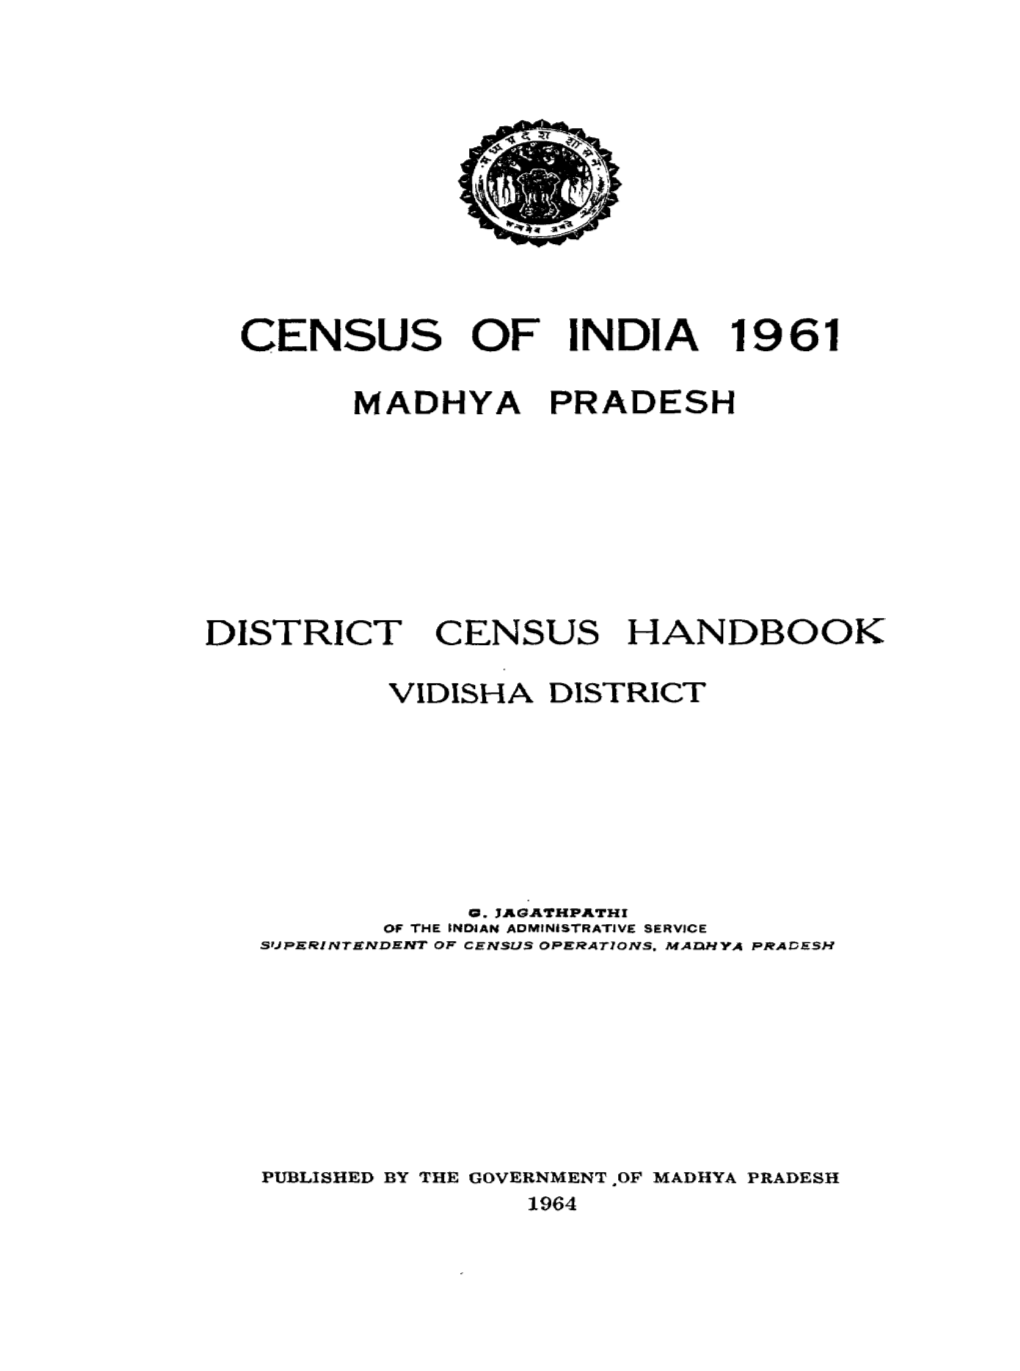 District Census Handbook, Vidisha